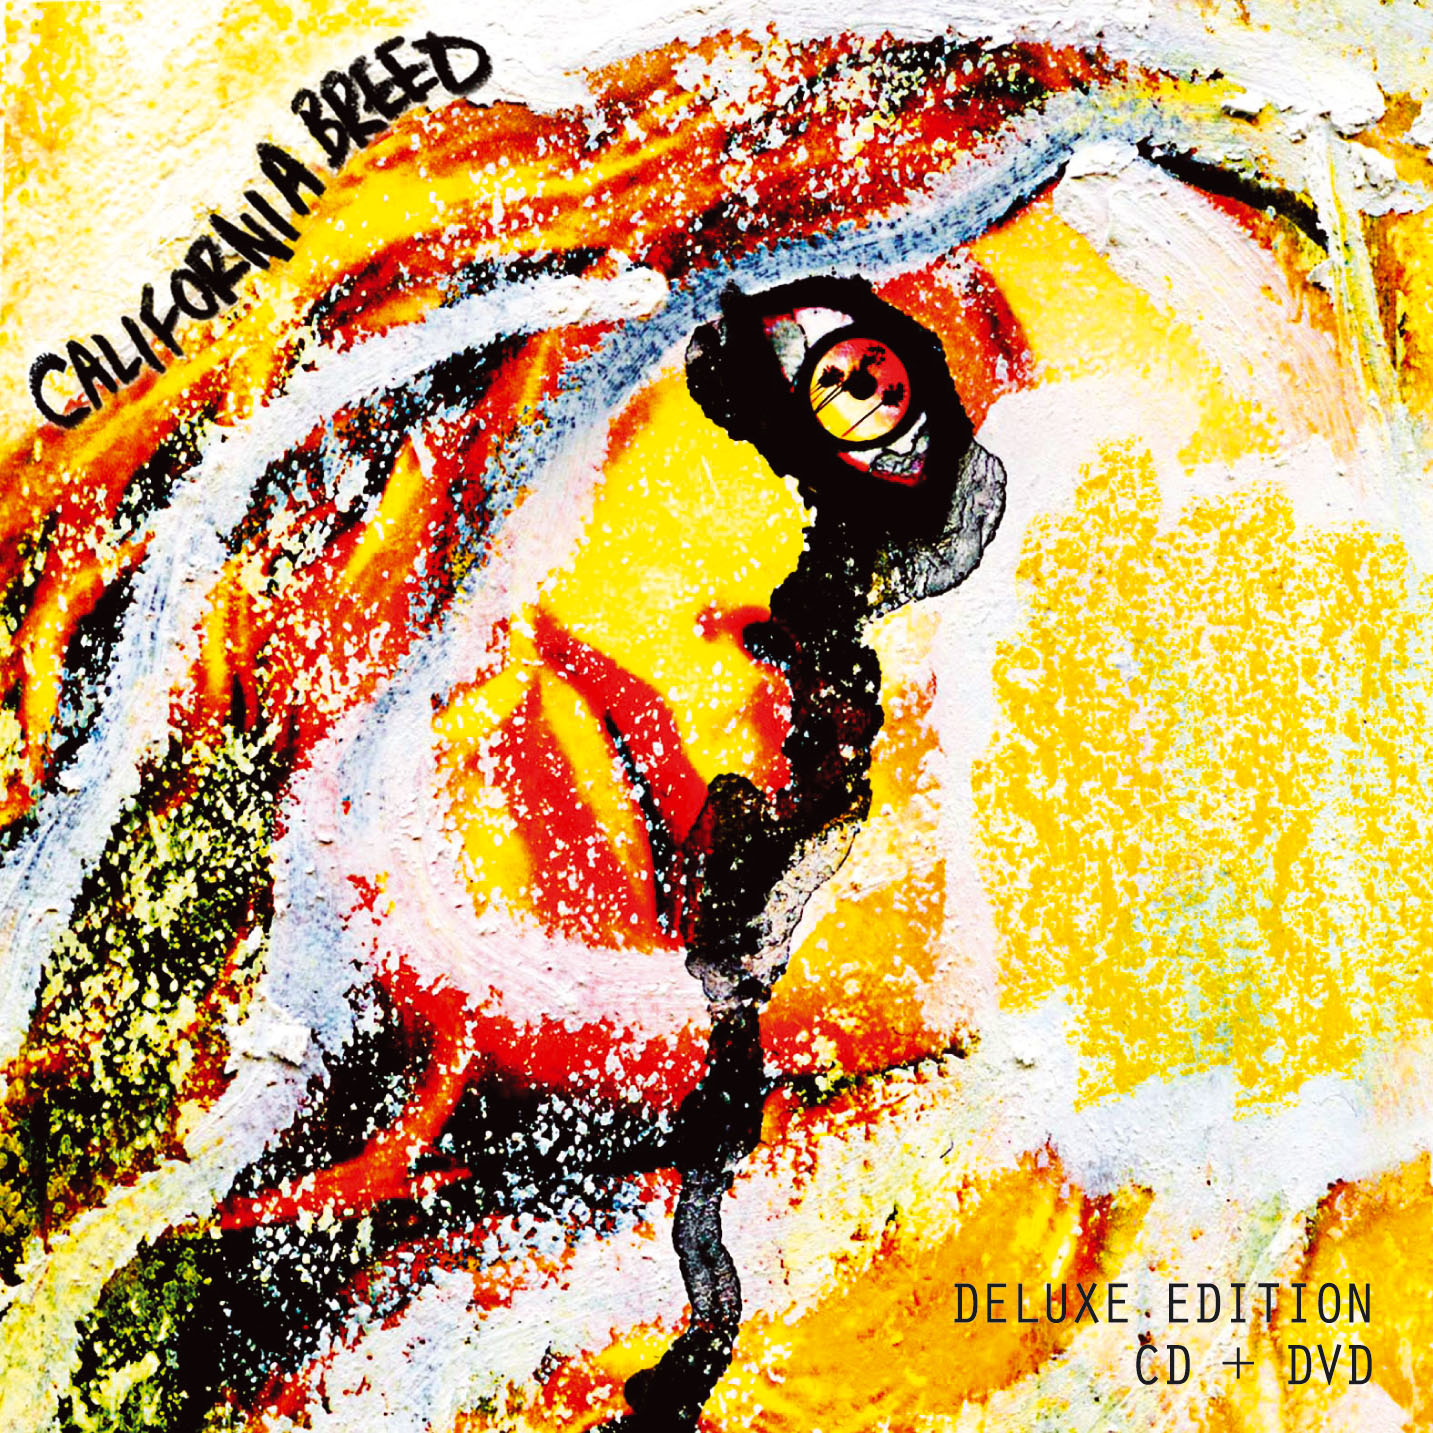 California Breed - California Breed (Deluxe Edition)